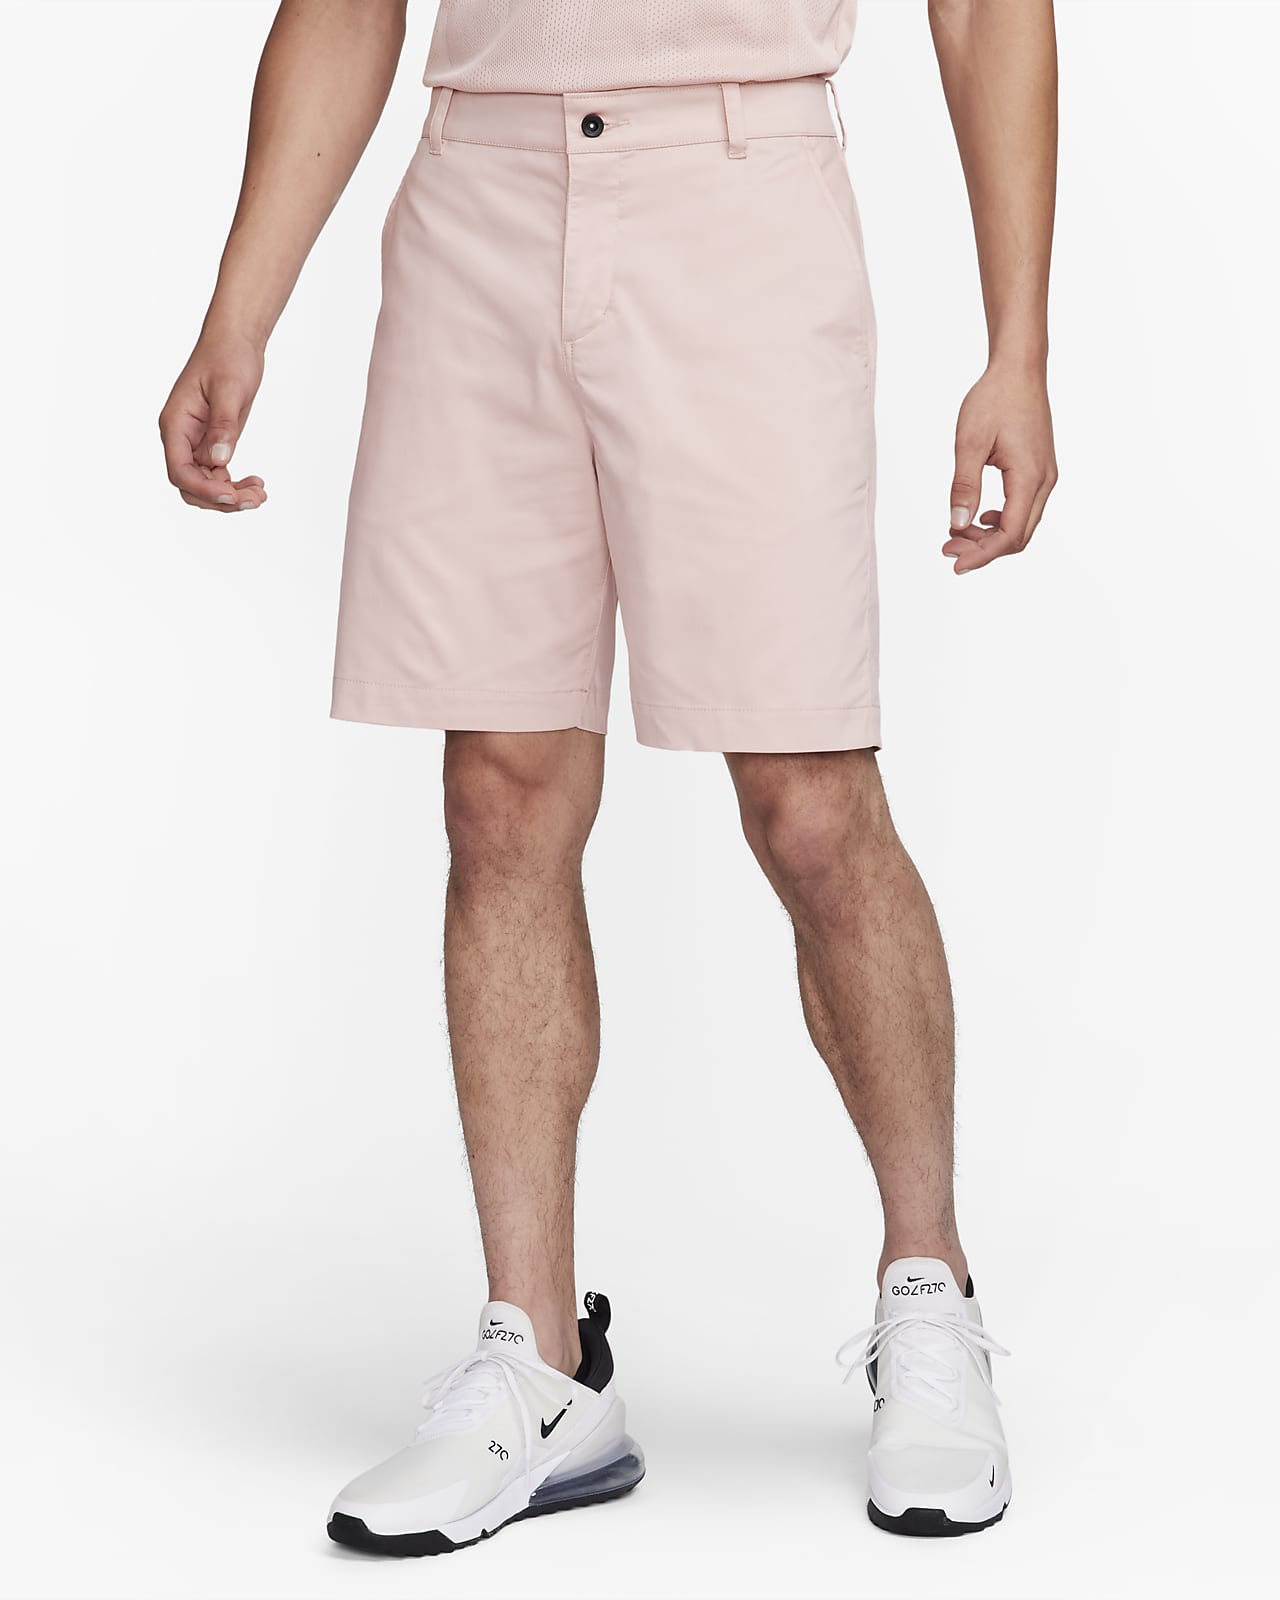 Men's Shorts, Shop Chino, Dress Shorts & More